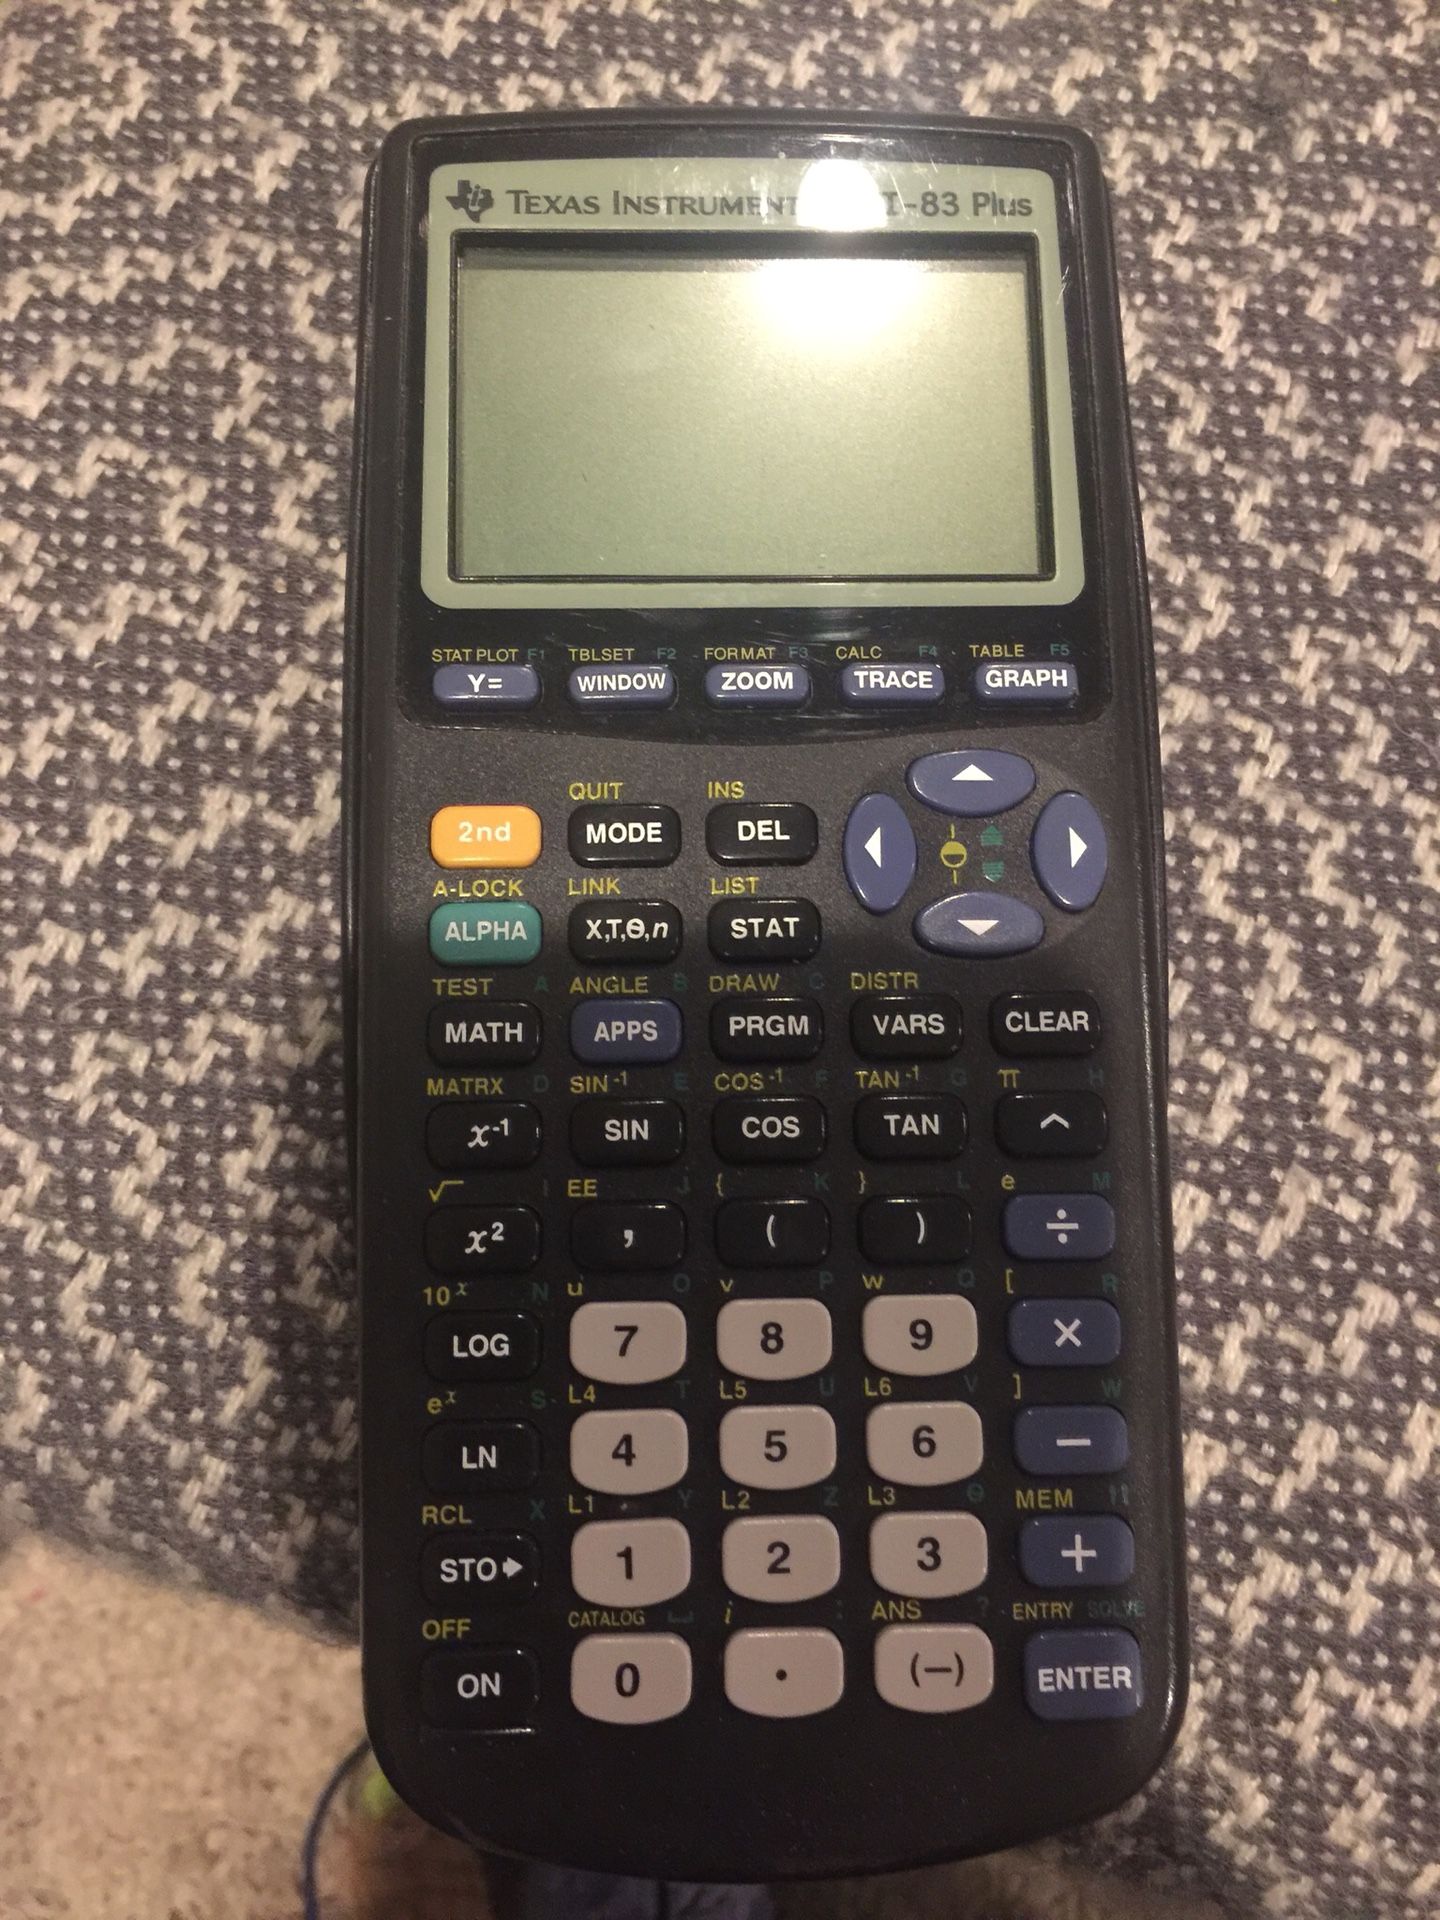 Texas Instrument TI-83 Plus graphing calculator